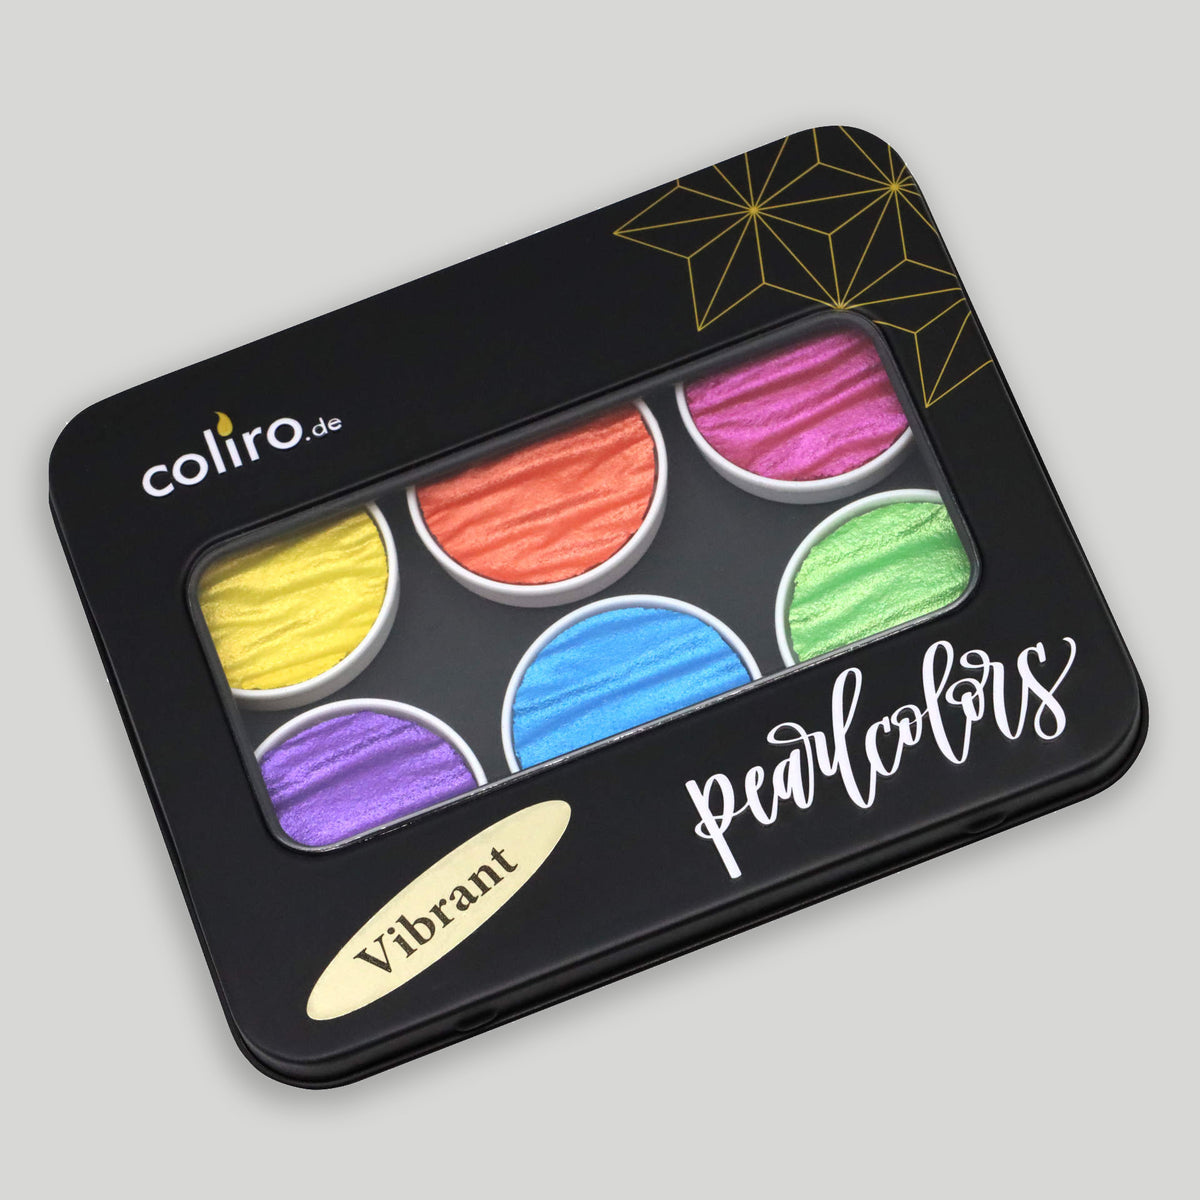 Coliro Pearlcolors set 'Vibrant'